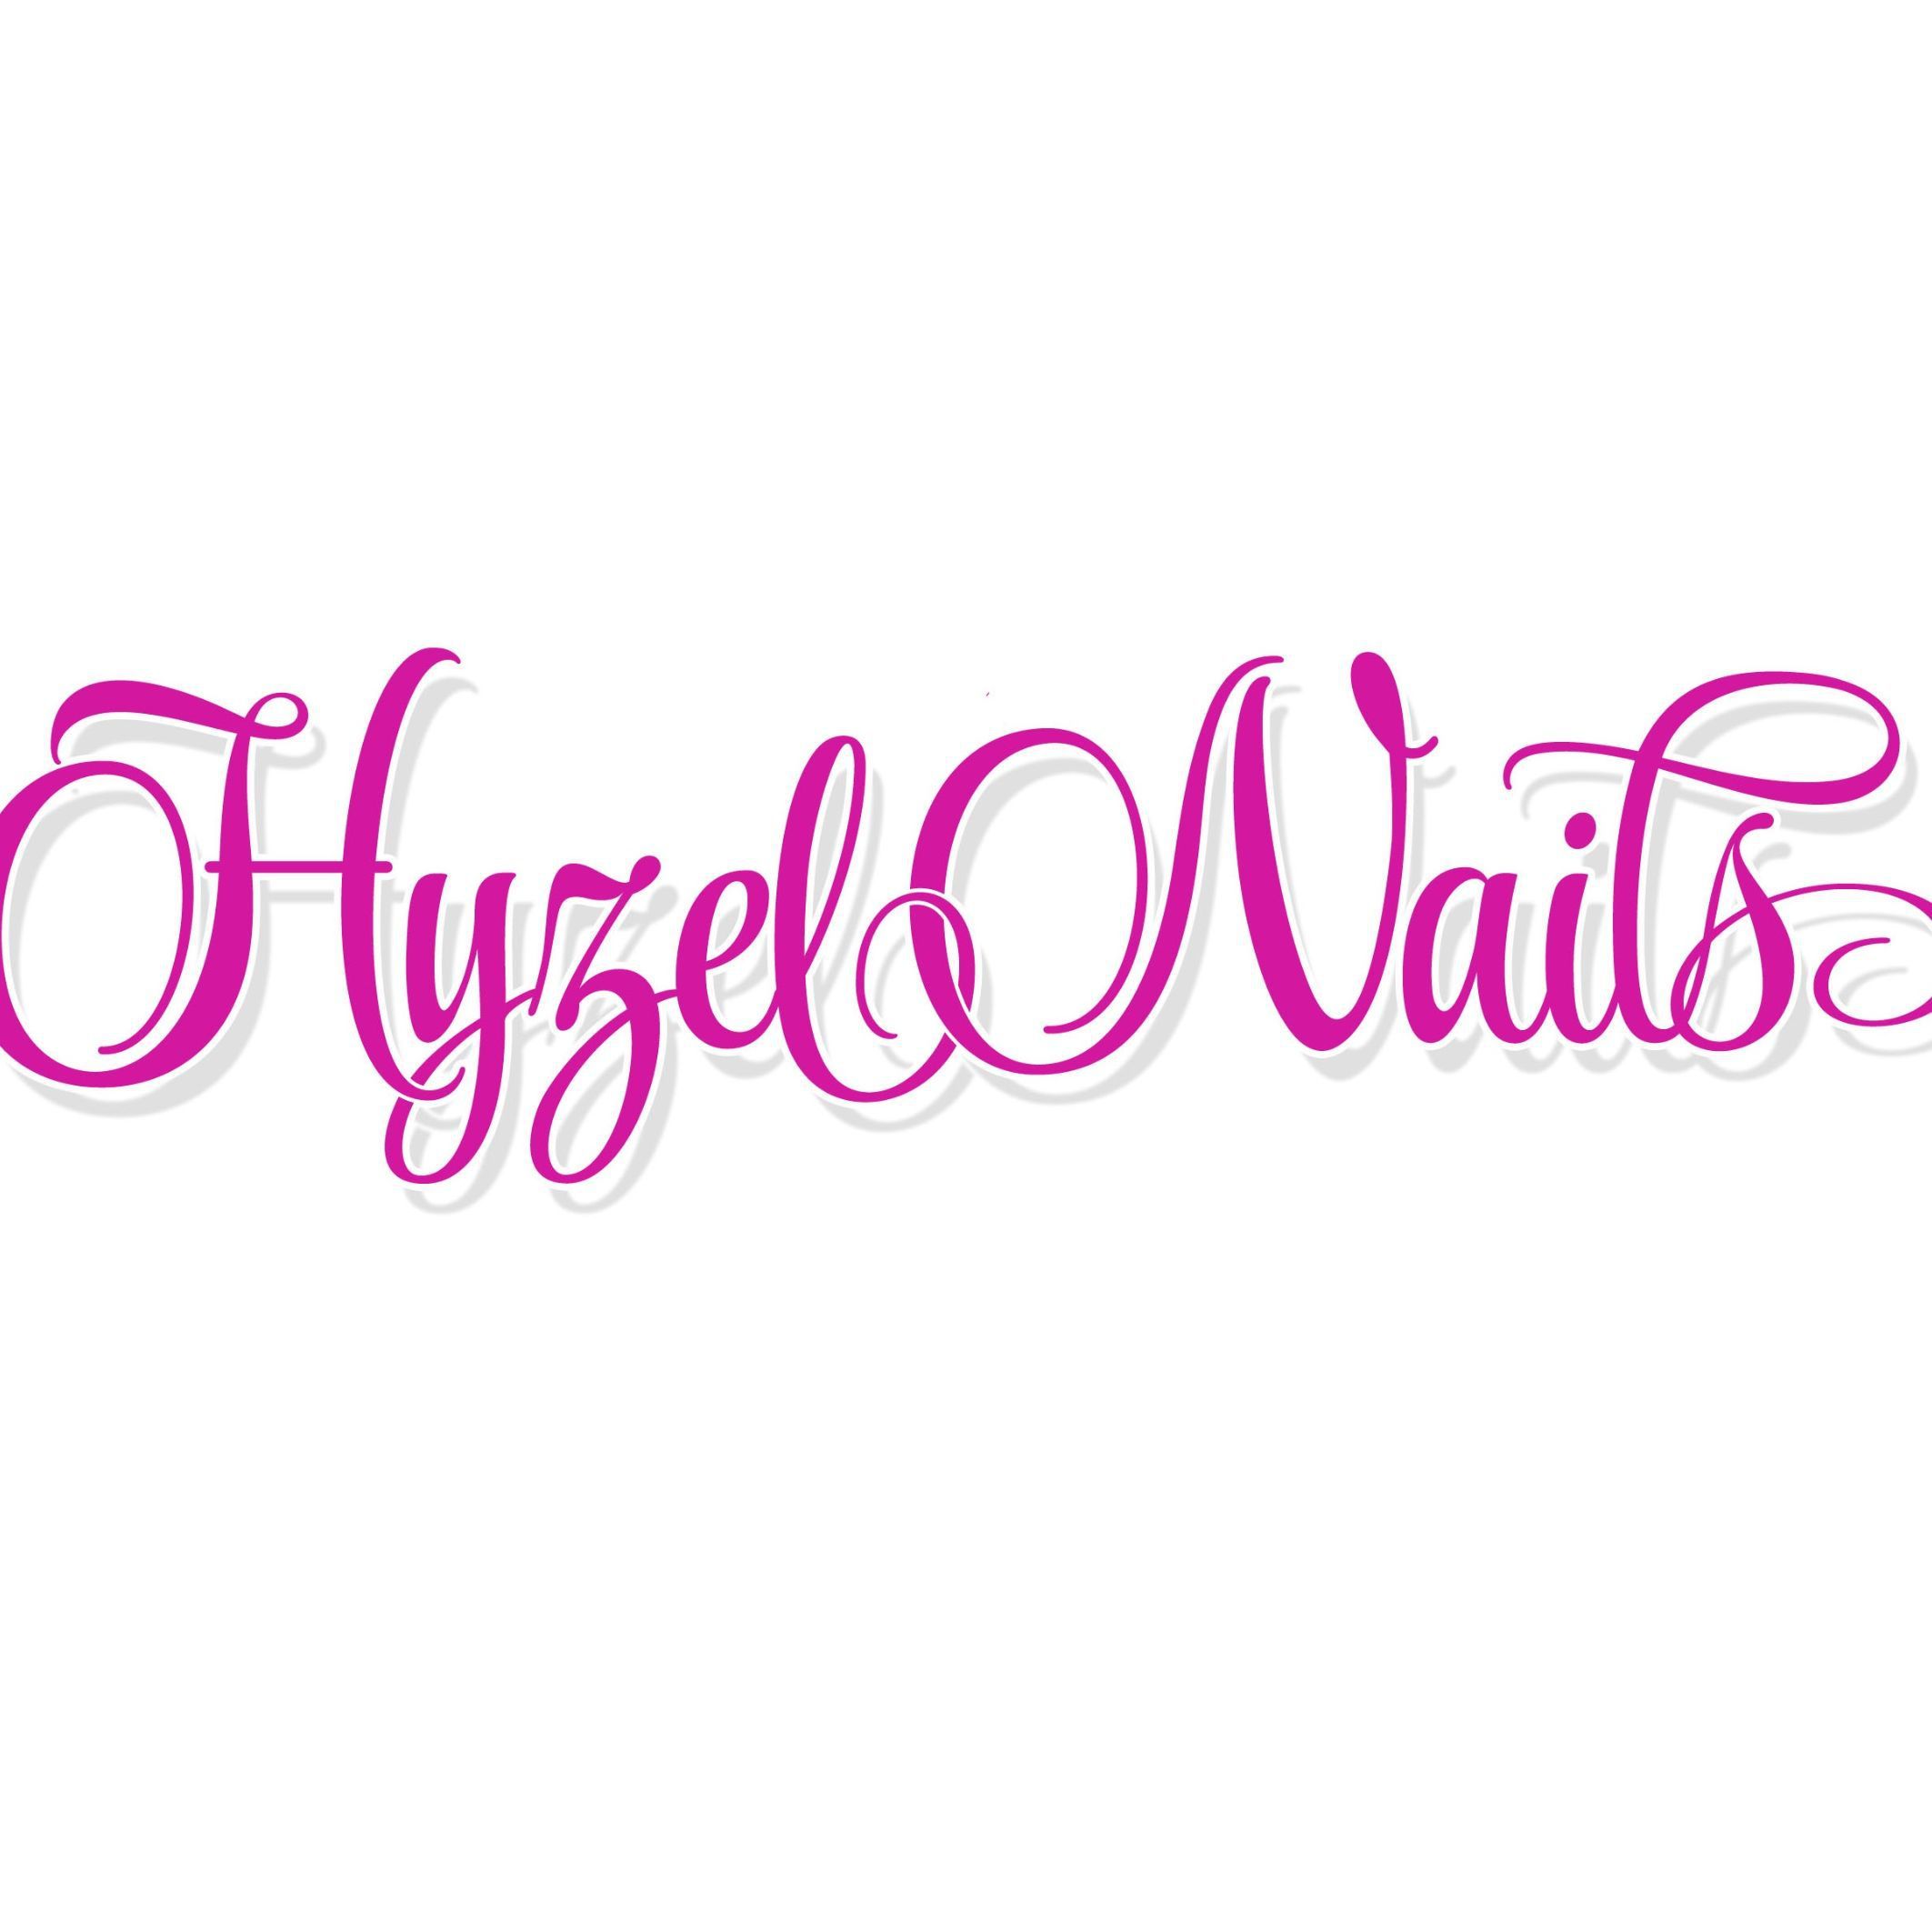 Hyzel Nails, 229 Levis Ave, K1L 6H9, Ottawa